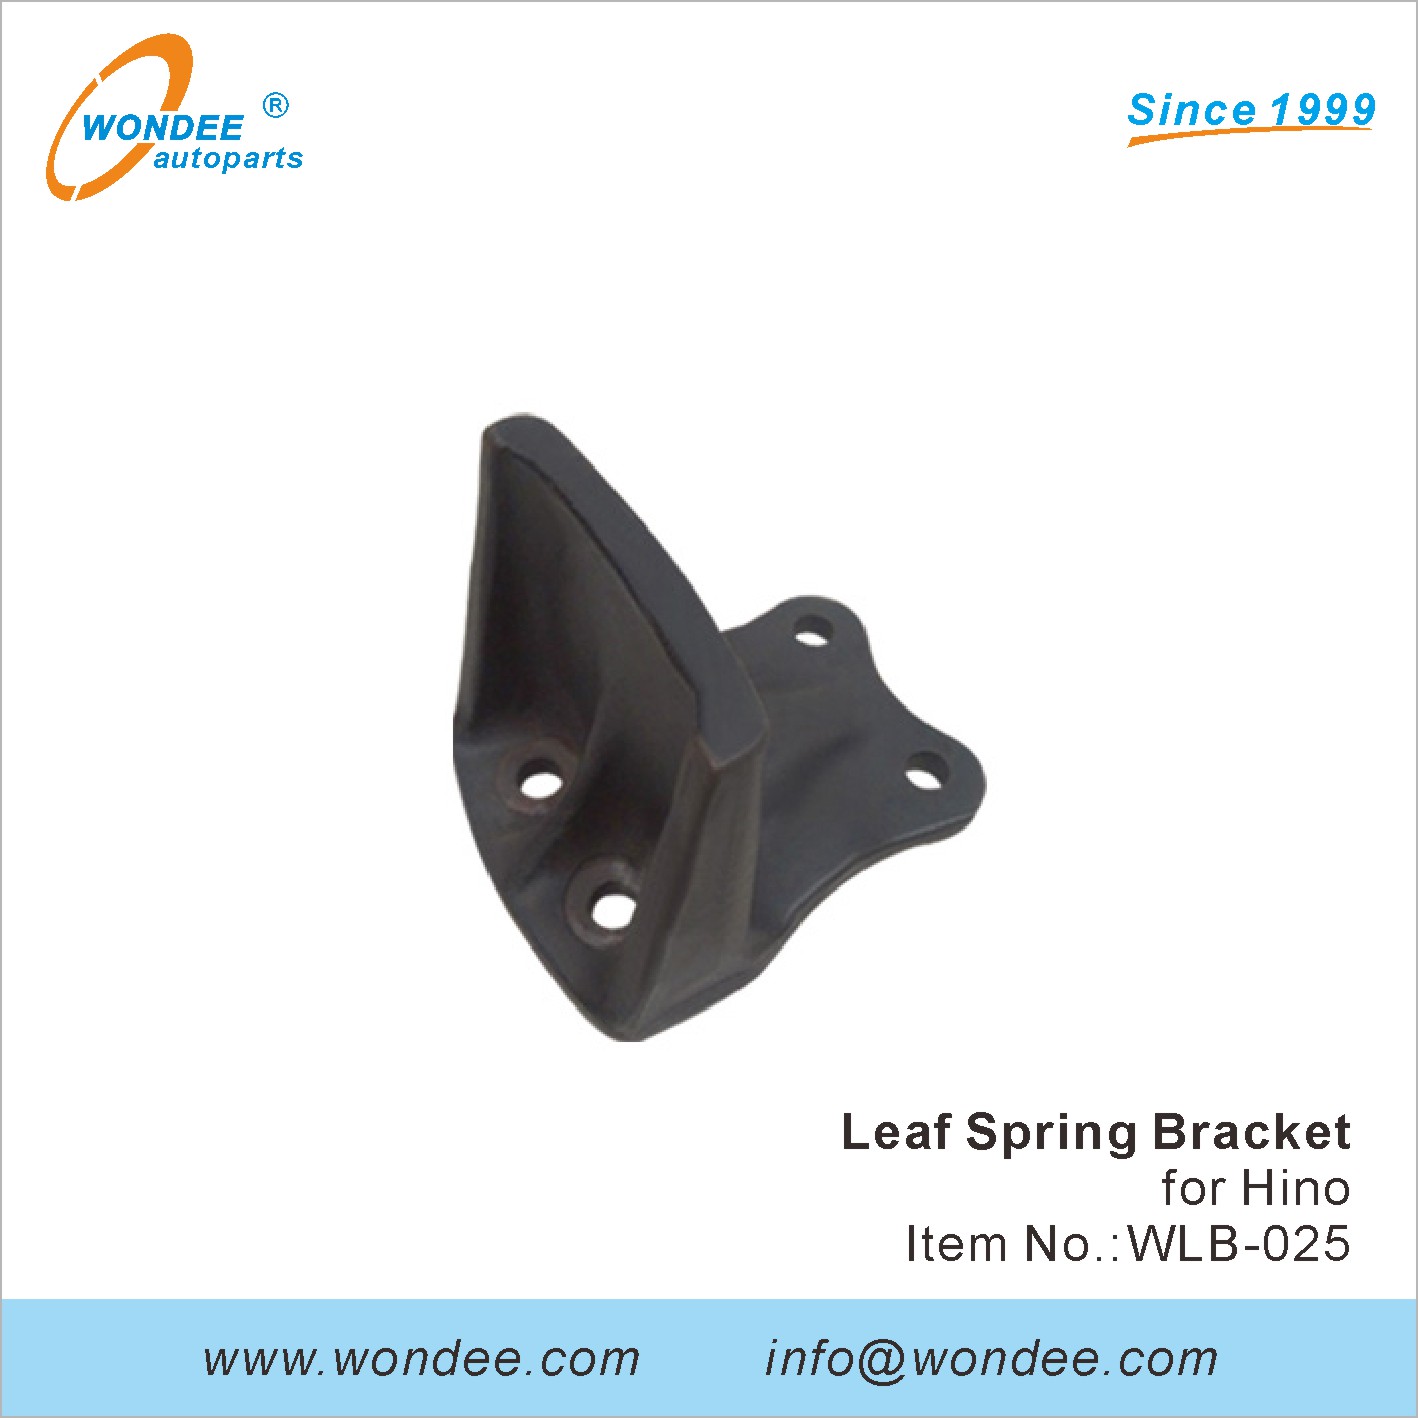 WONDEE leaf spring bracket (25)